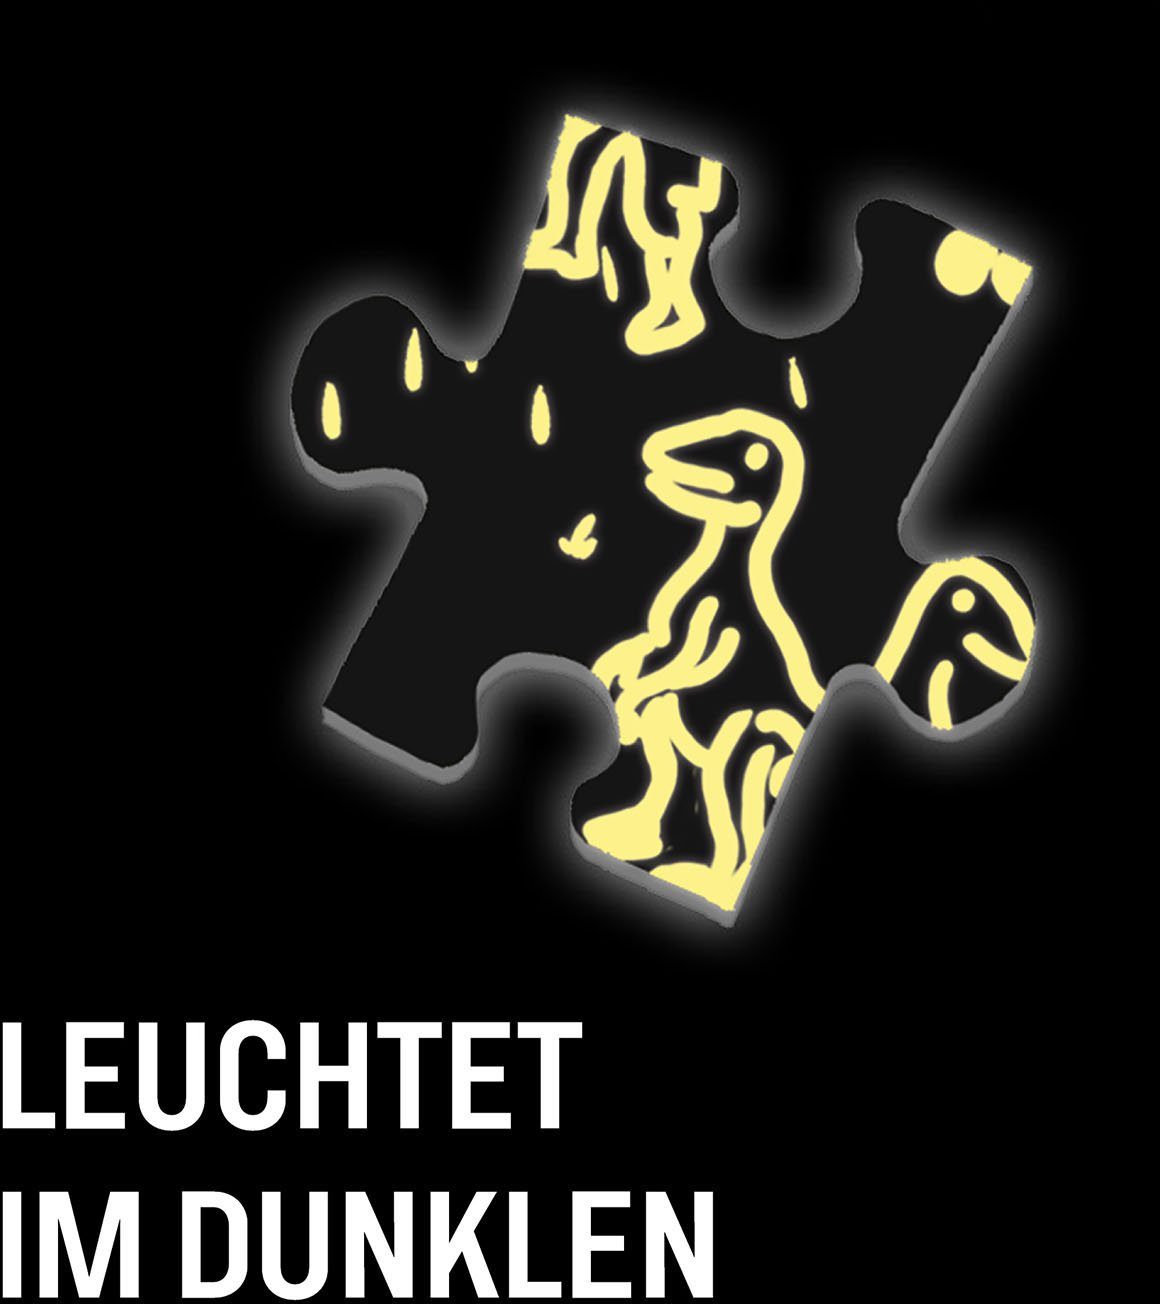 Puzzleteile, ??? in in T-Rex drei Germany Kids Action, Made Puzzle 200 Kosmos Krimipuzzle Die